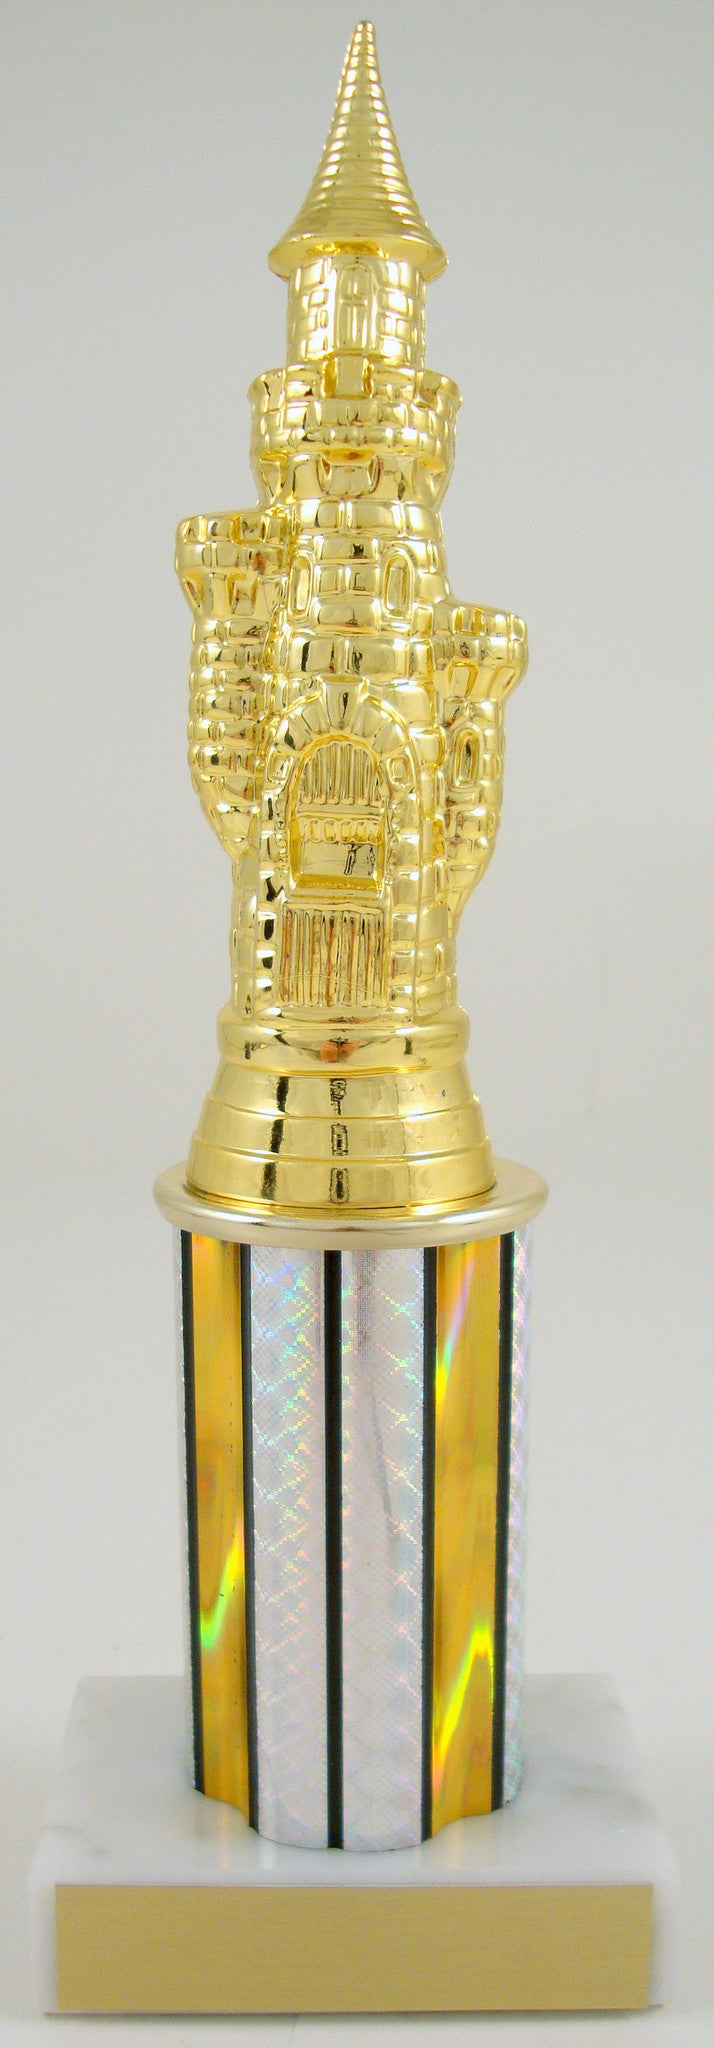 Sandcastle Column Trophy-Trophies-Schoppy&